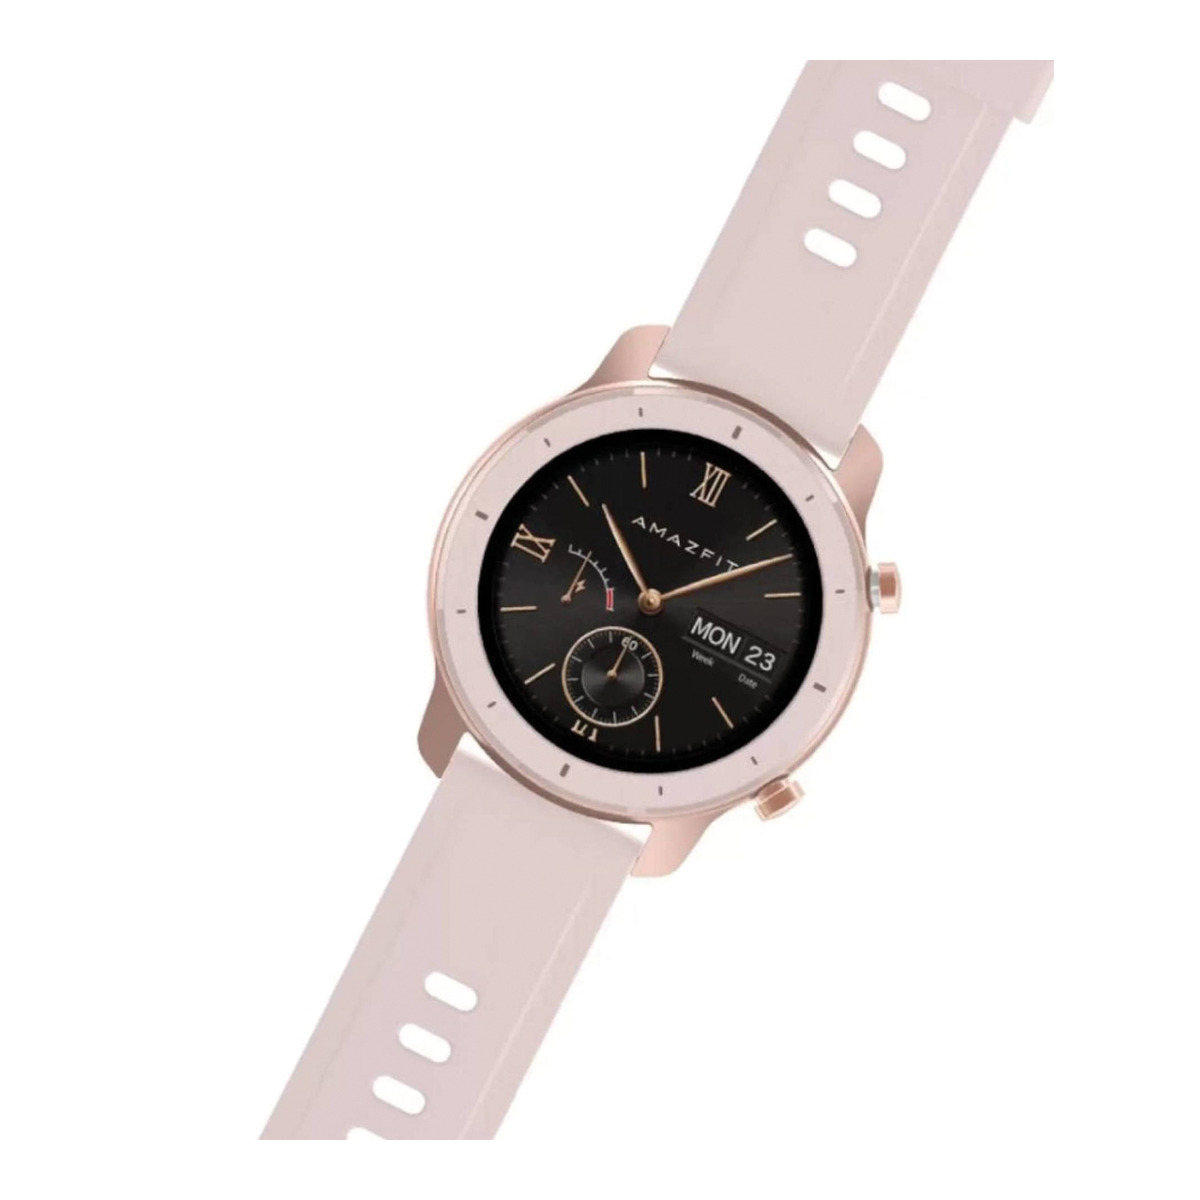 Aluminium mm 118 Smartwatch GTR PINK AMAZFIT + 75 42 Pink Blossom Silikon, mm, A1910 Cherry